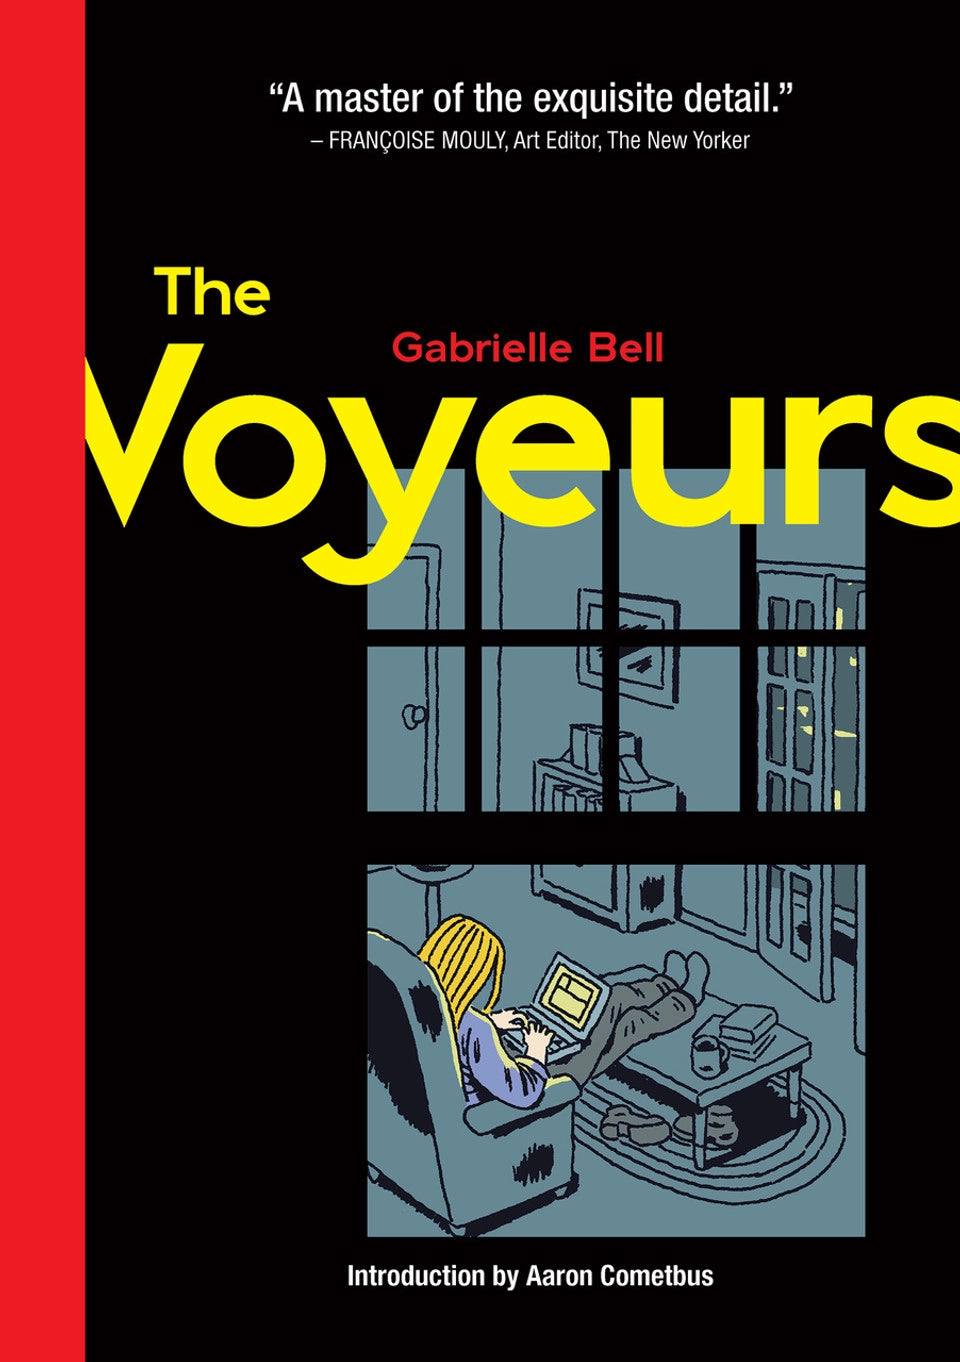 The Voyeurs by Gabrielle Bell